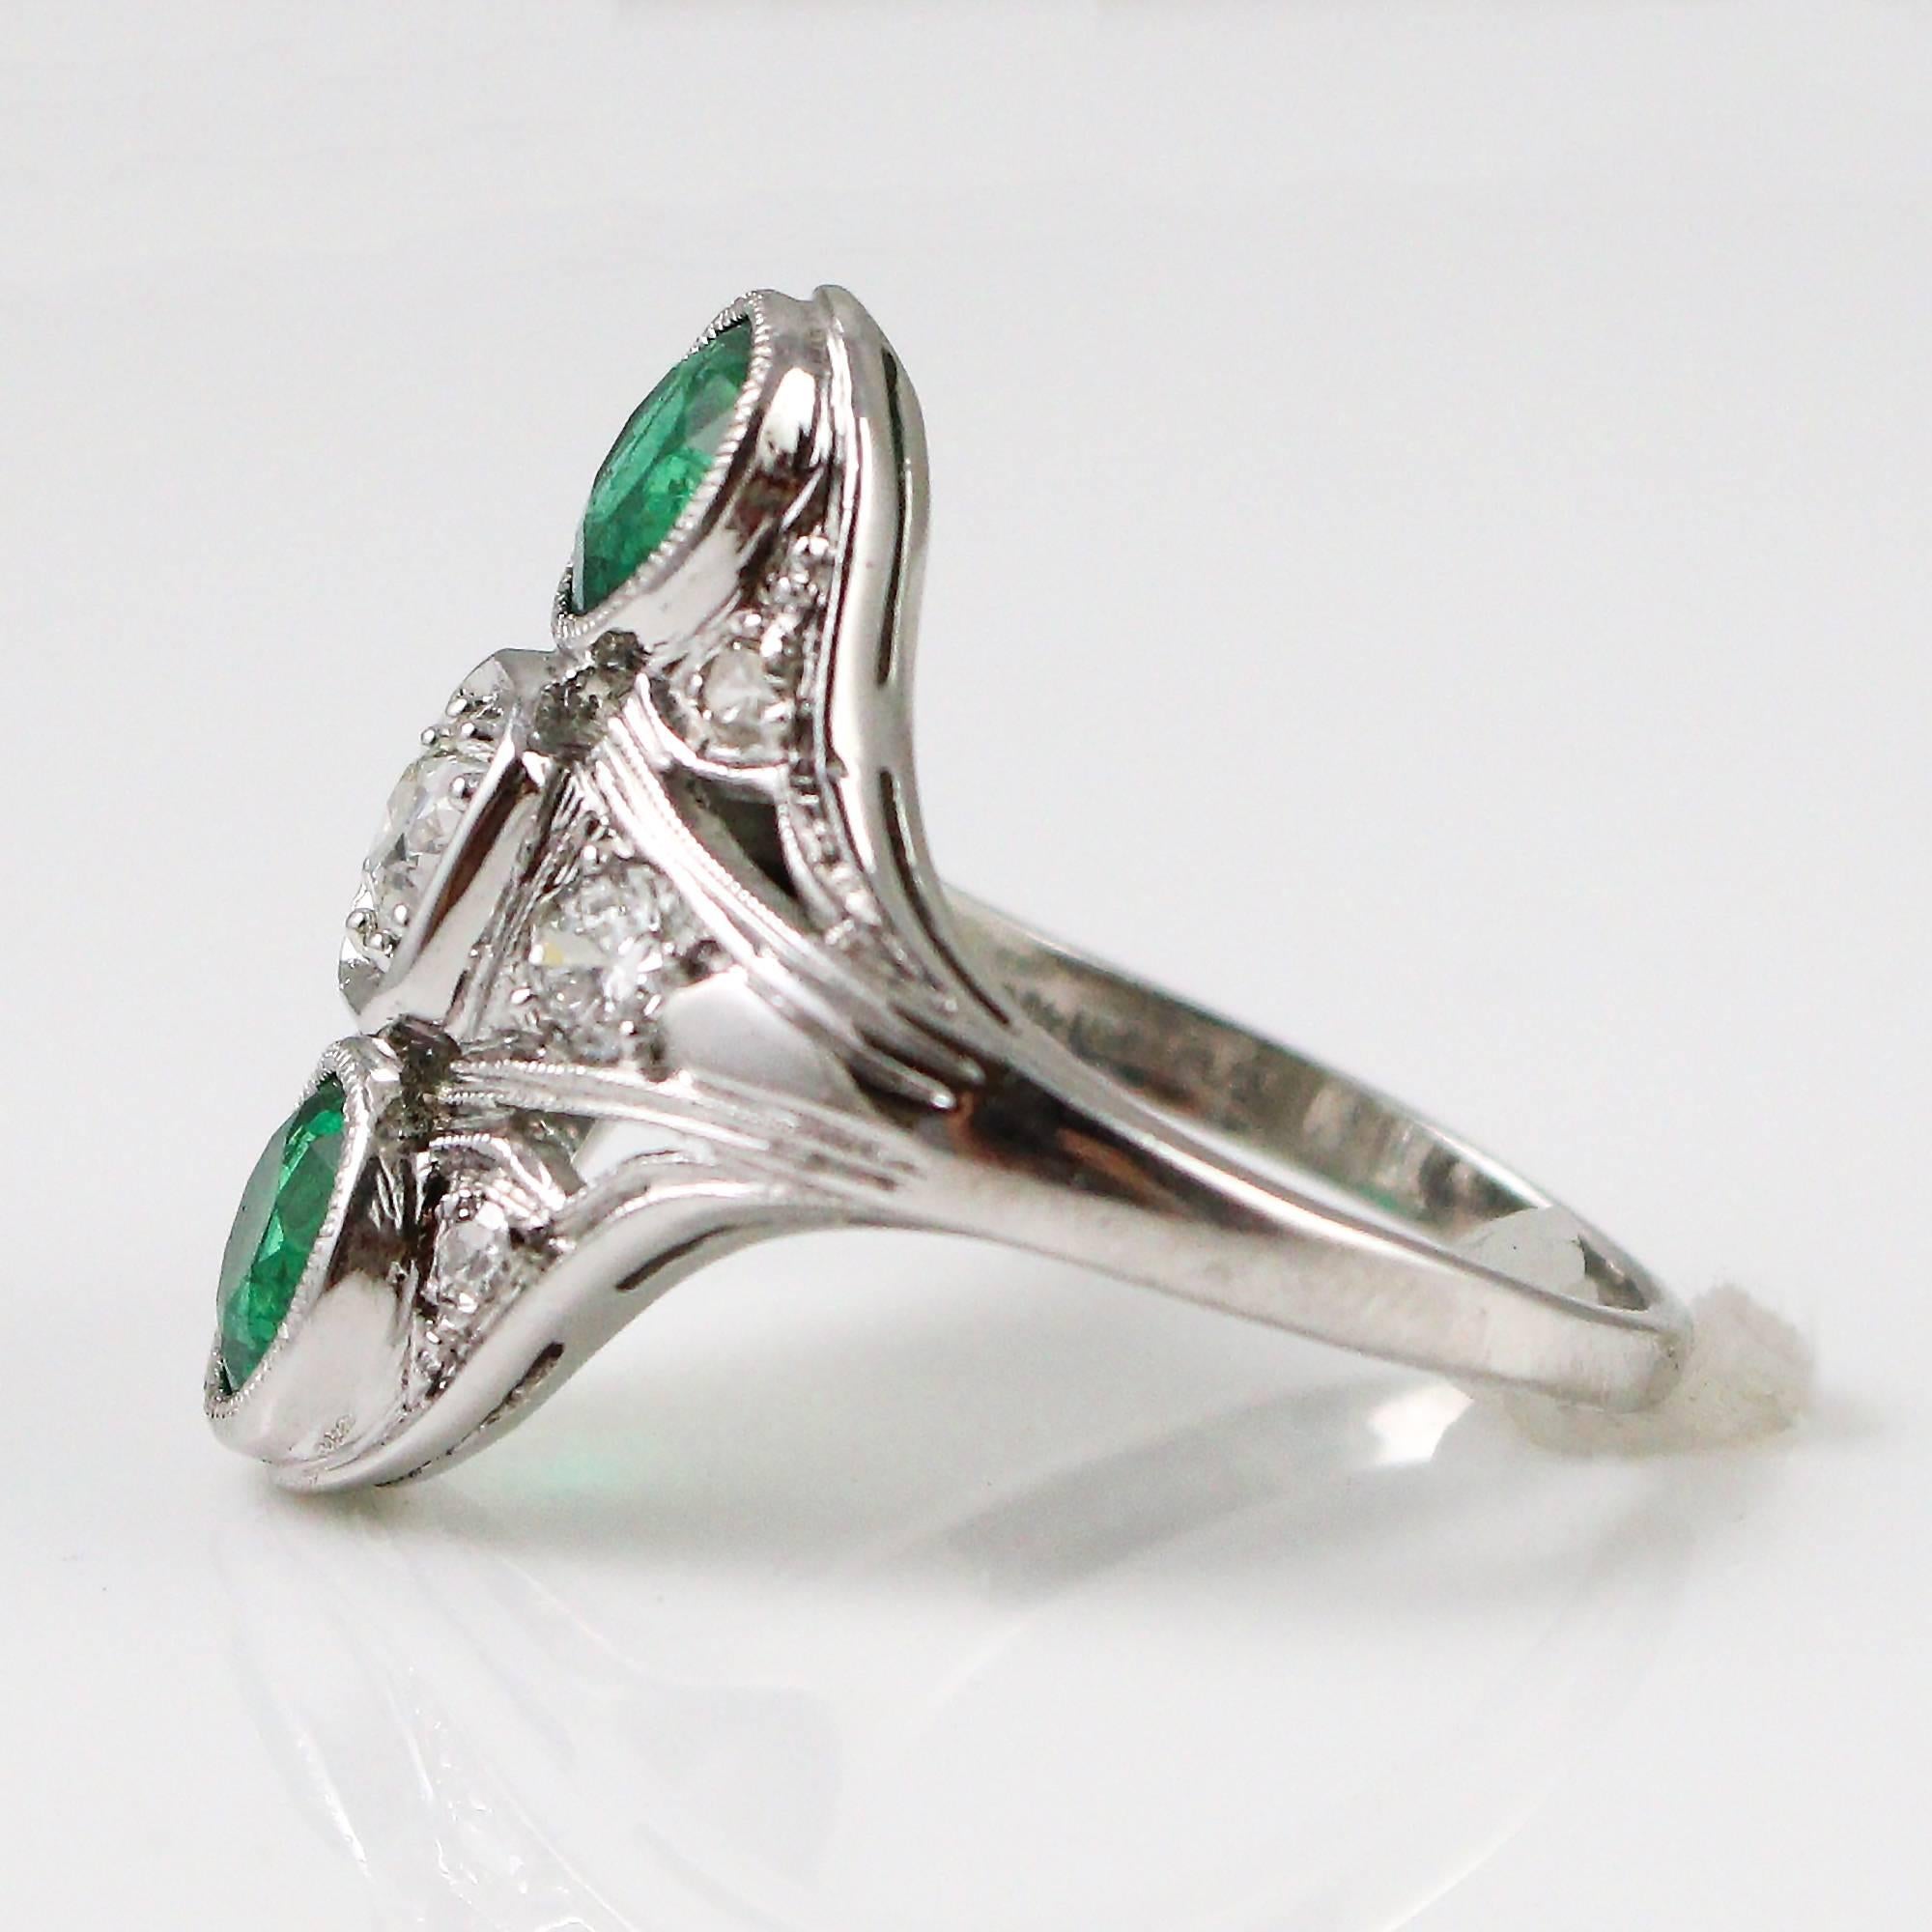 This gorgeous ring centers a 0.39ct old European cut diamond grading as an 